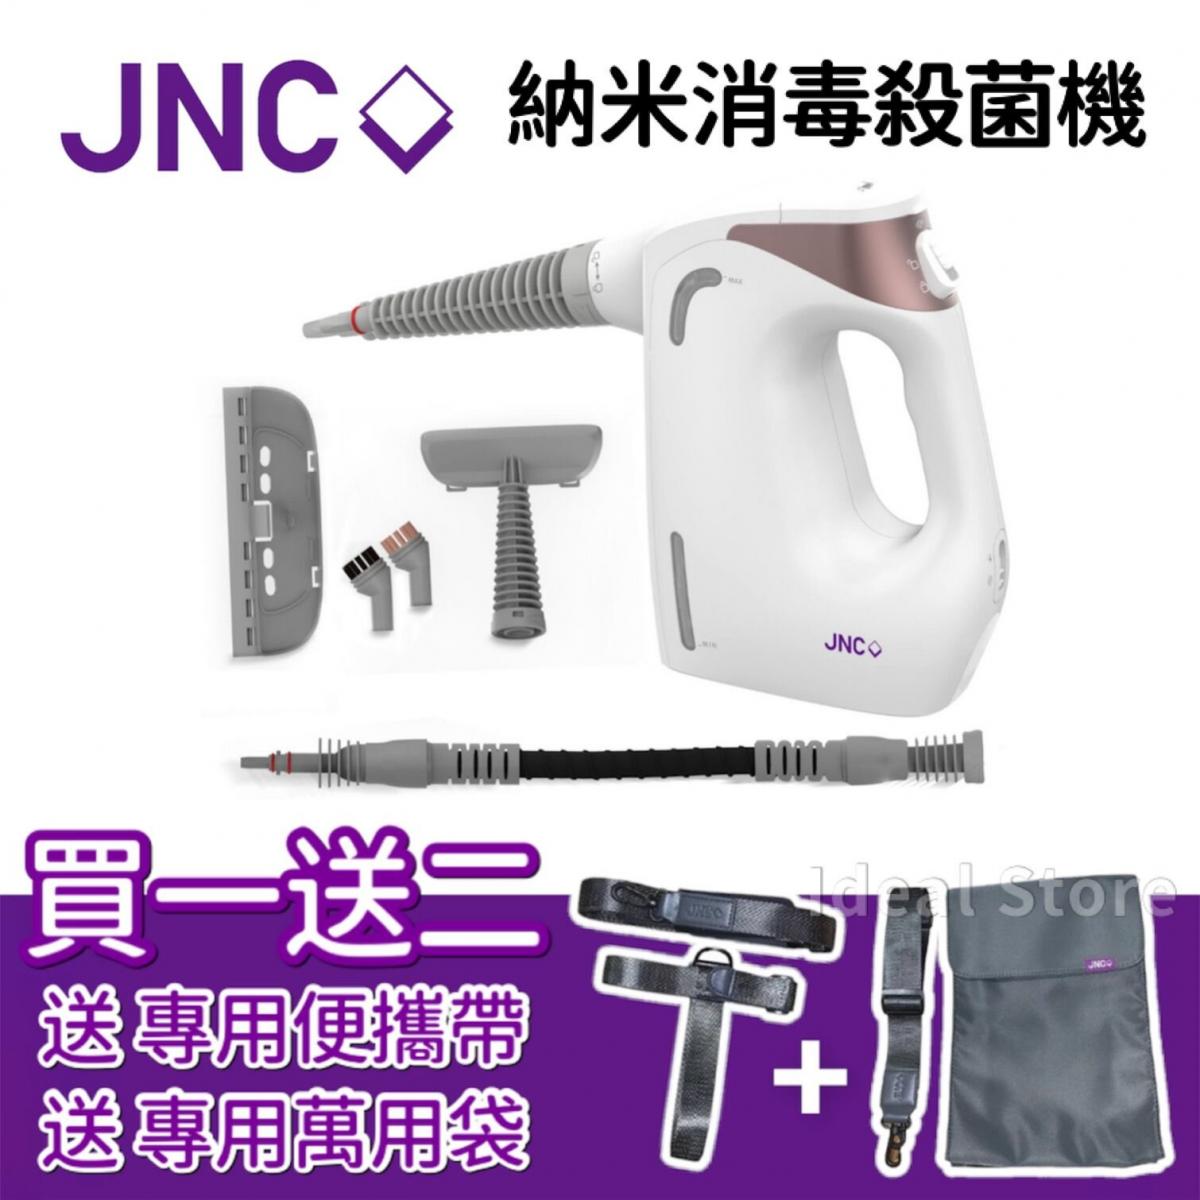 JNC - Nano Disinfection and Sterilization Machine | High Temperature Nano Steam | Negative Ions | Virus Killing | Mite Removal - White (comes with a special portable bag and a special multi-purpose bag)